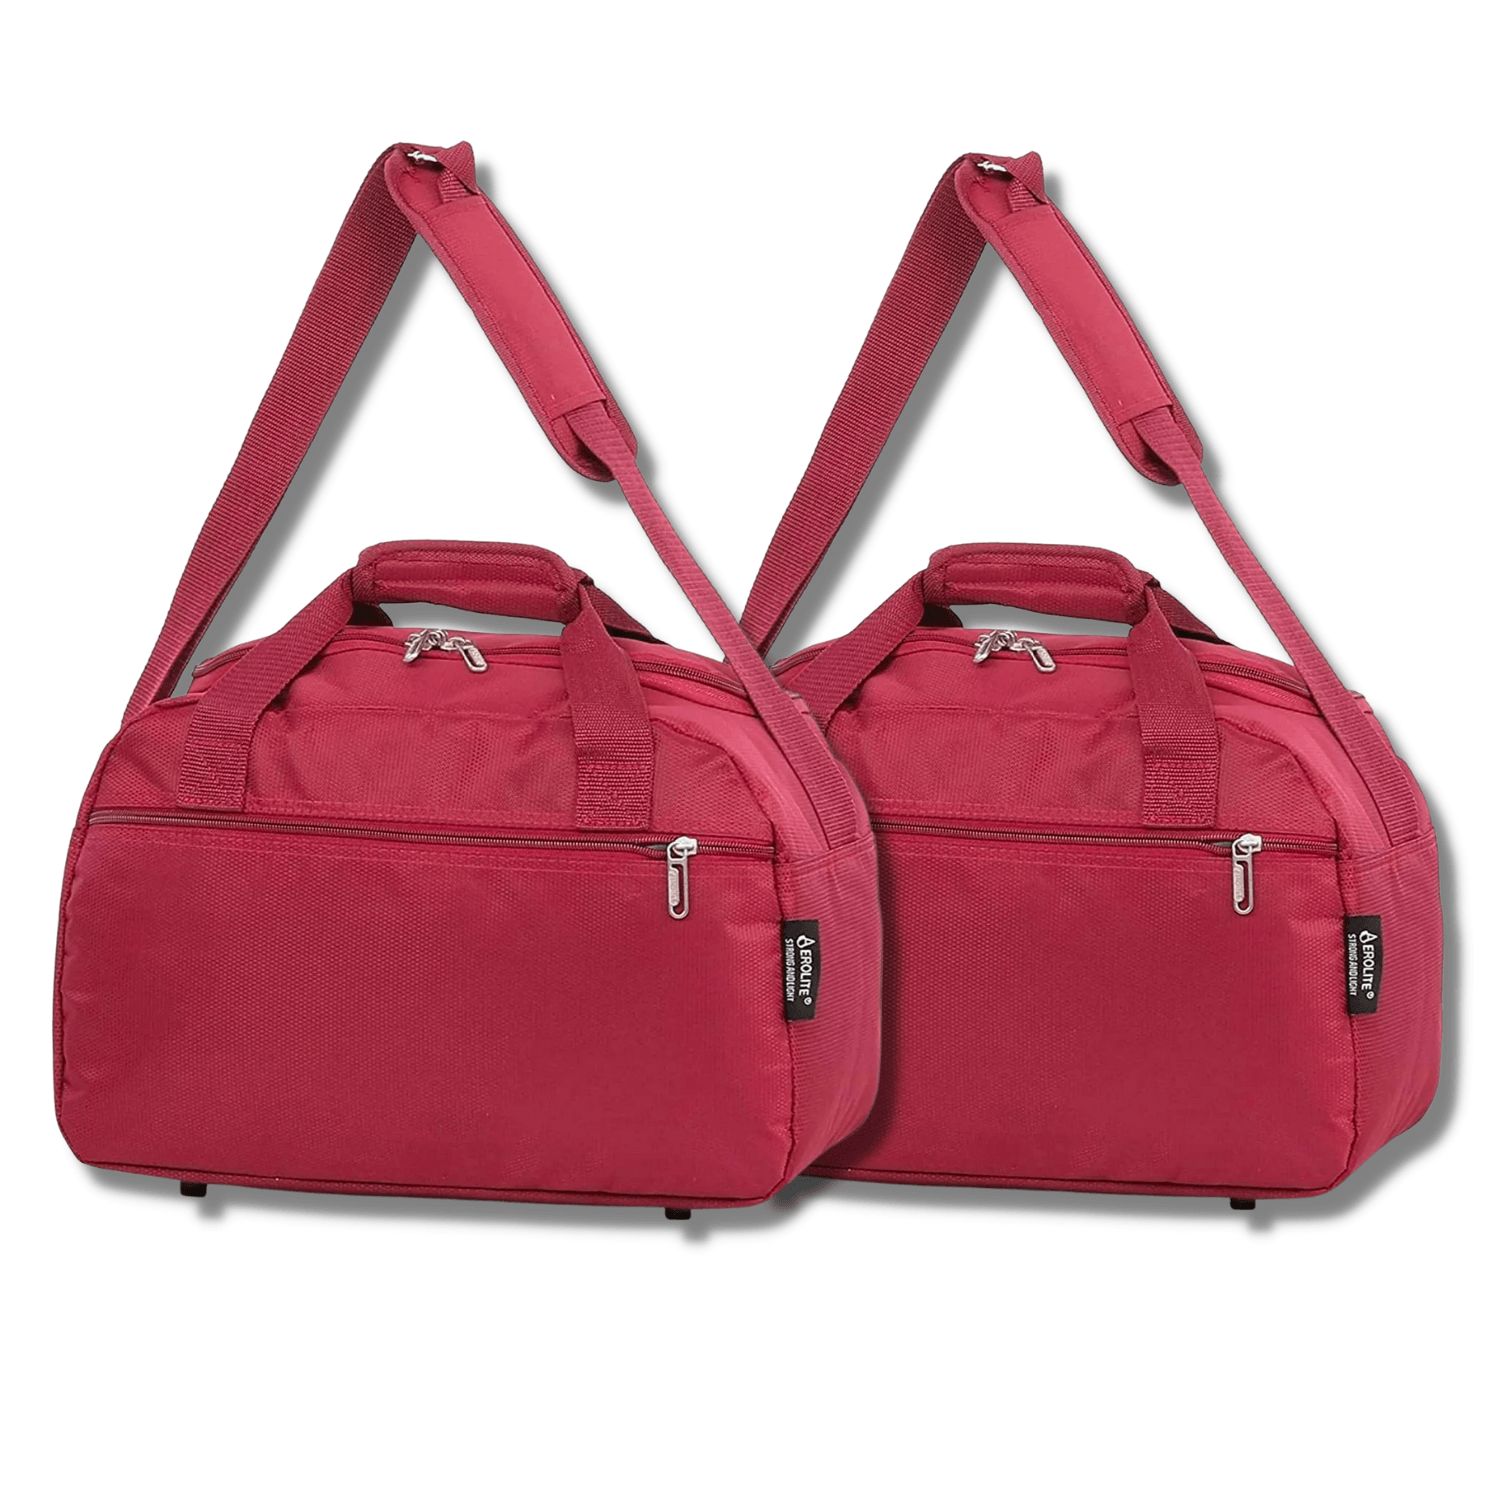 Handbags/Cabin Bag/Travel bag/ Luggage Bags, / Wheeler Bag/Wheel Bag/Trolley  Bags/trolly bags/trolli